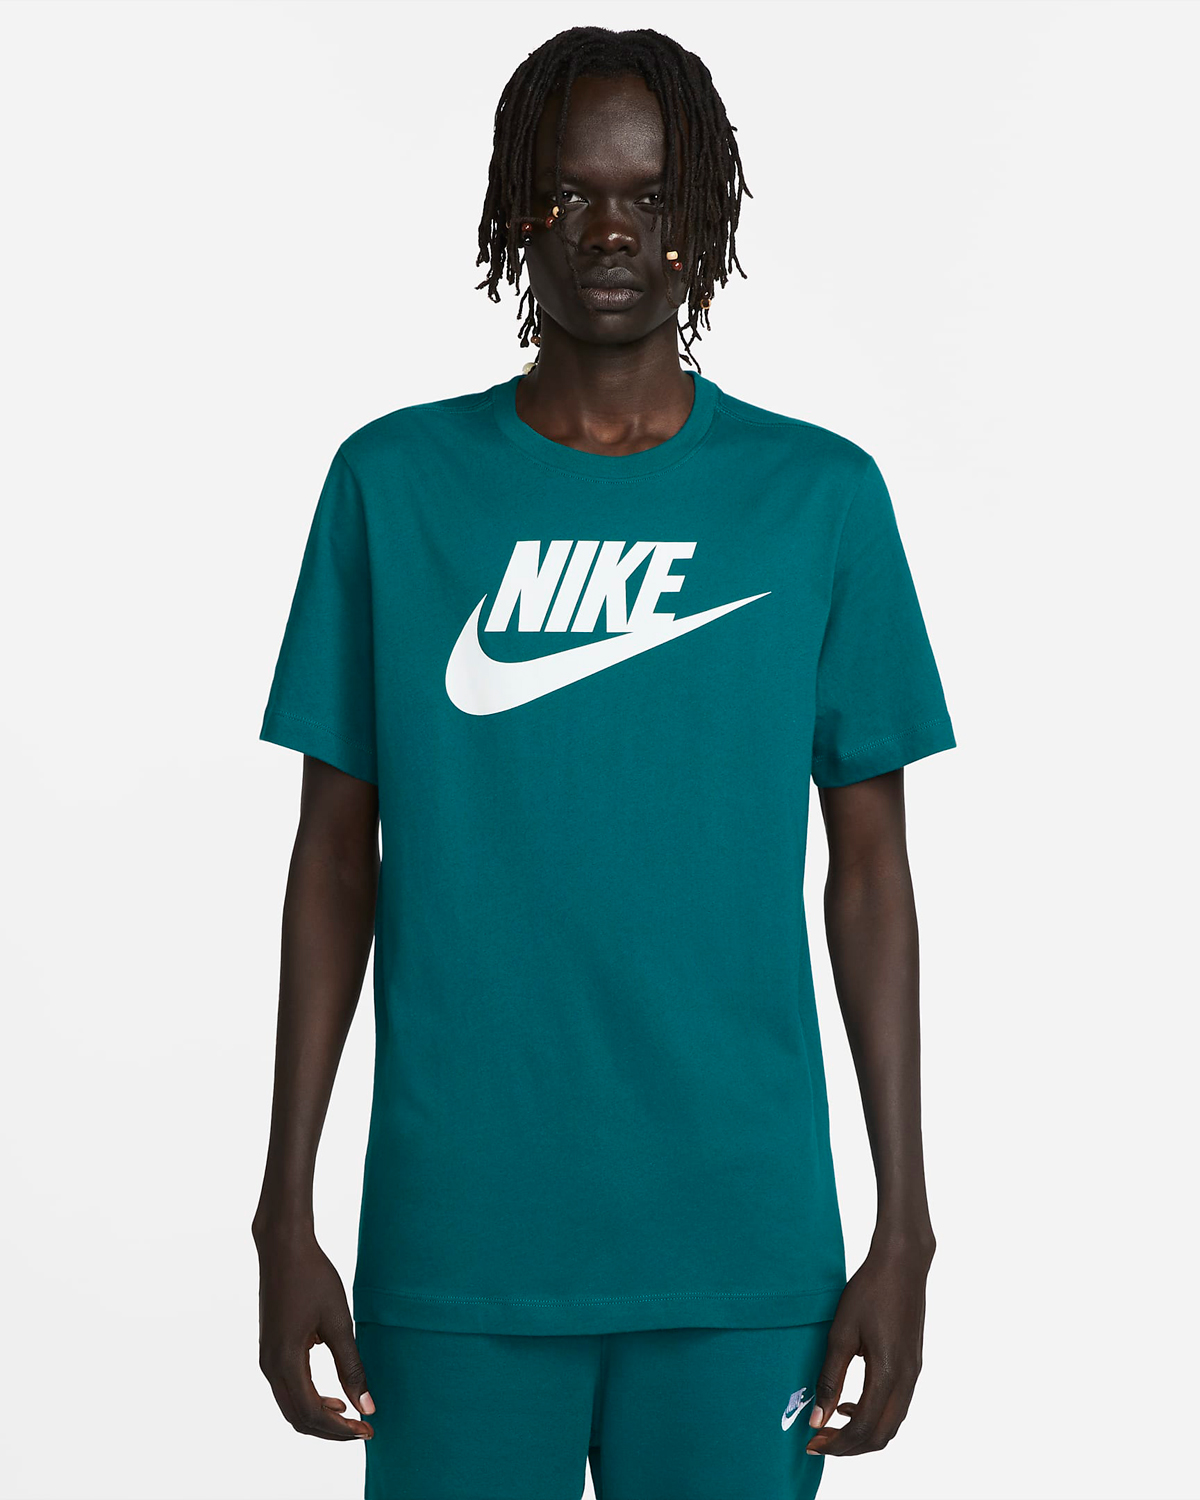 Nike-Sportswear-T-Shirt-Geode-Teal